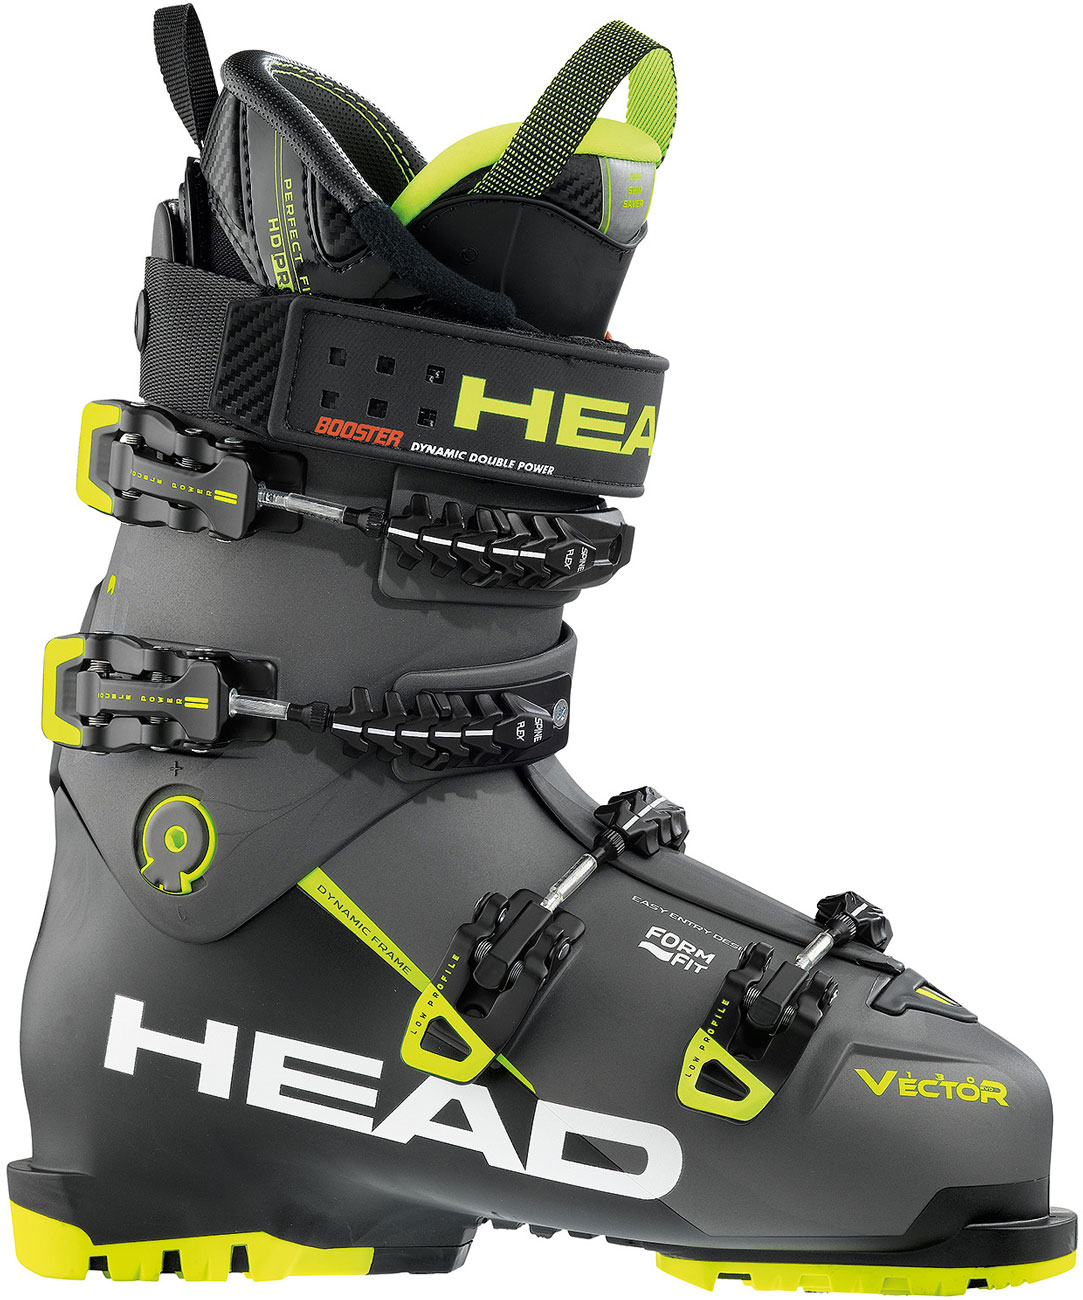 Ski boots - Head